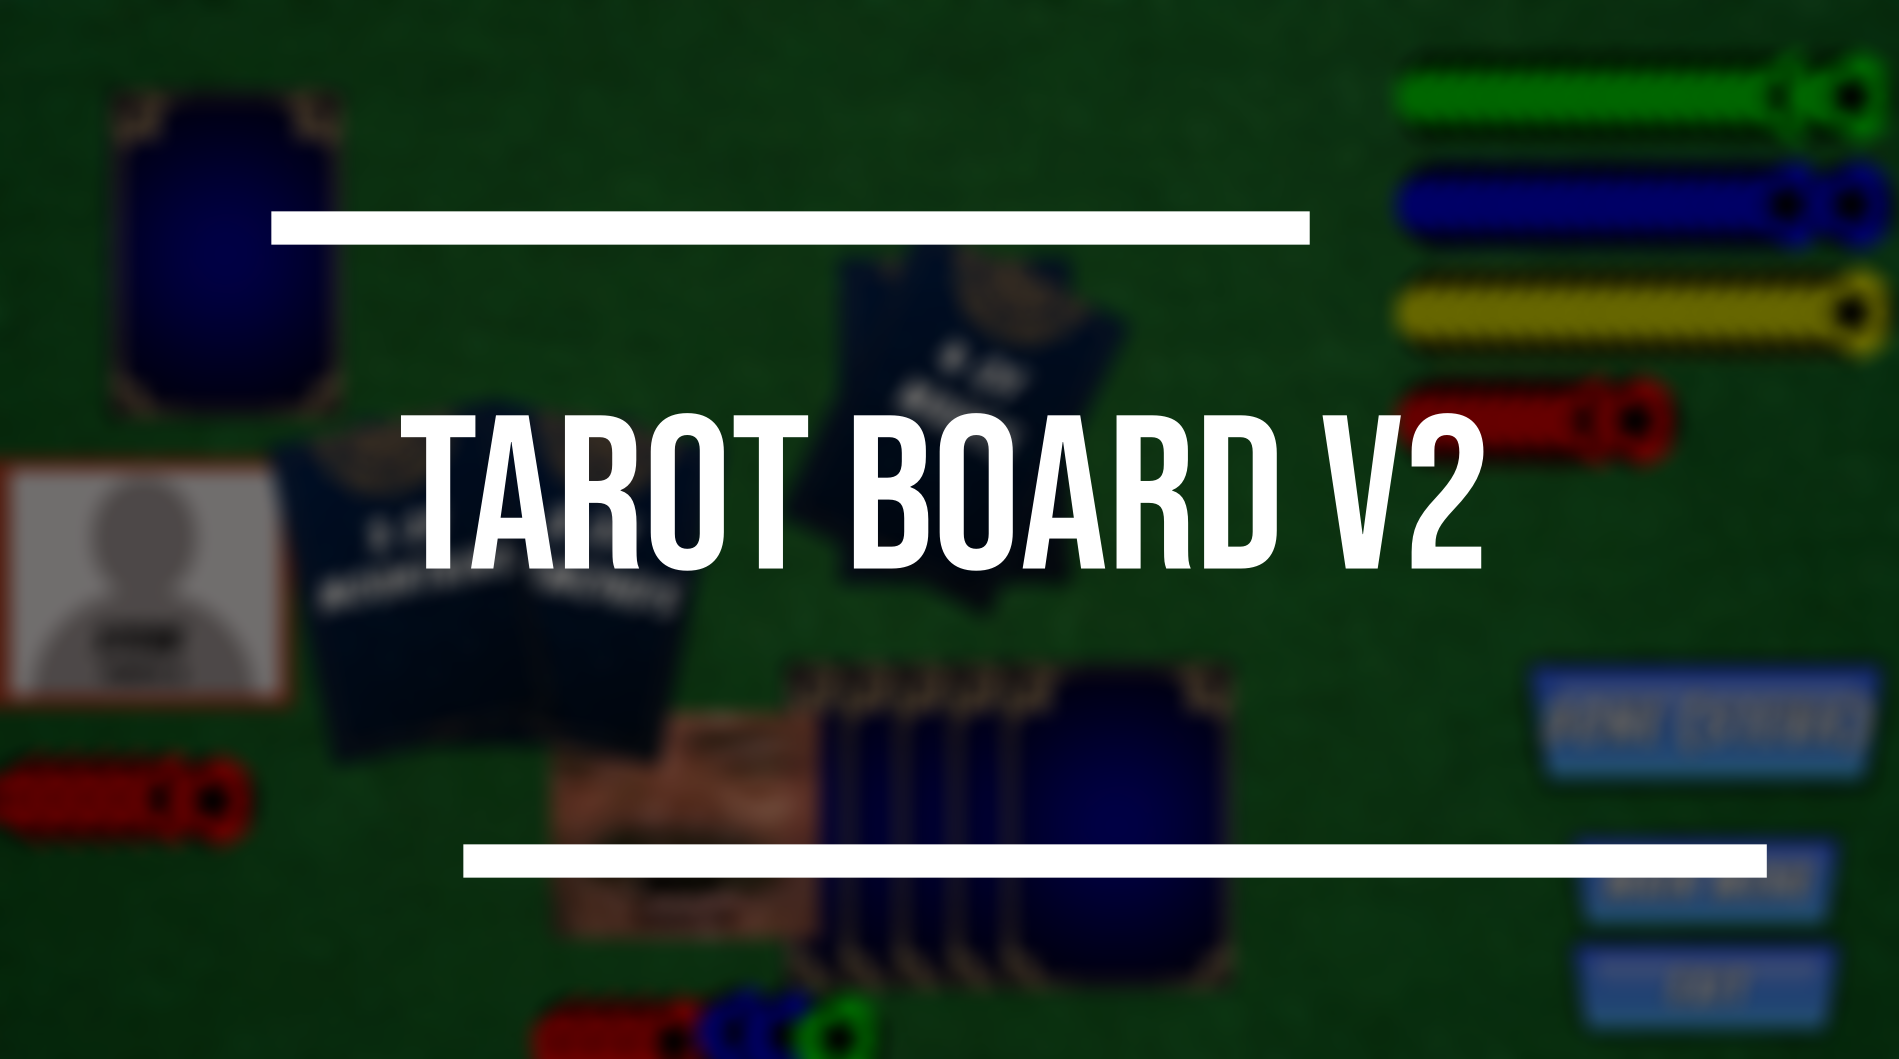 TarotBoard